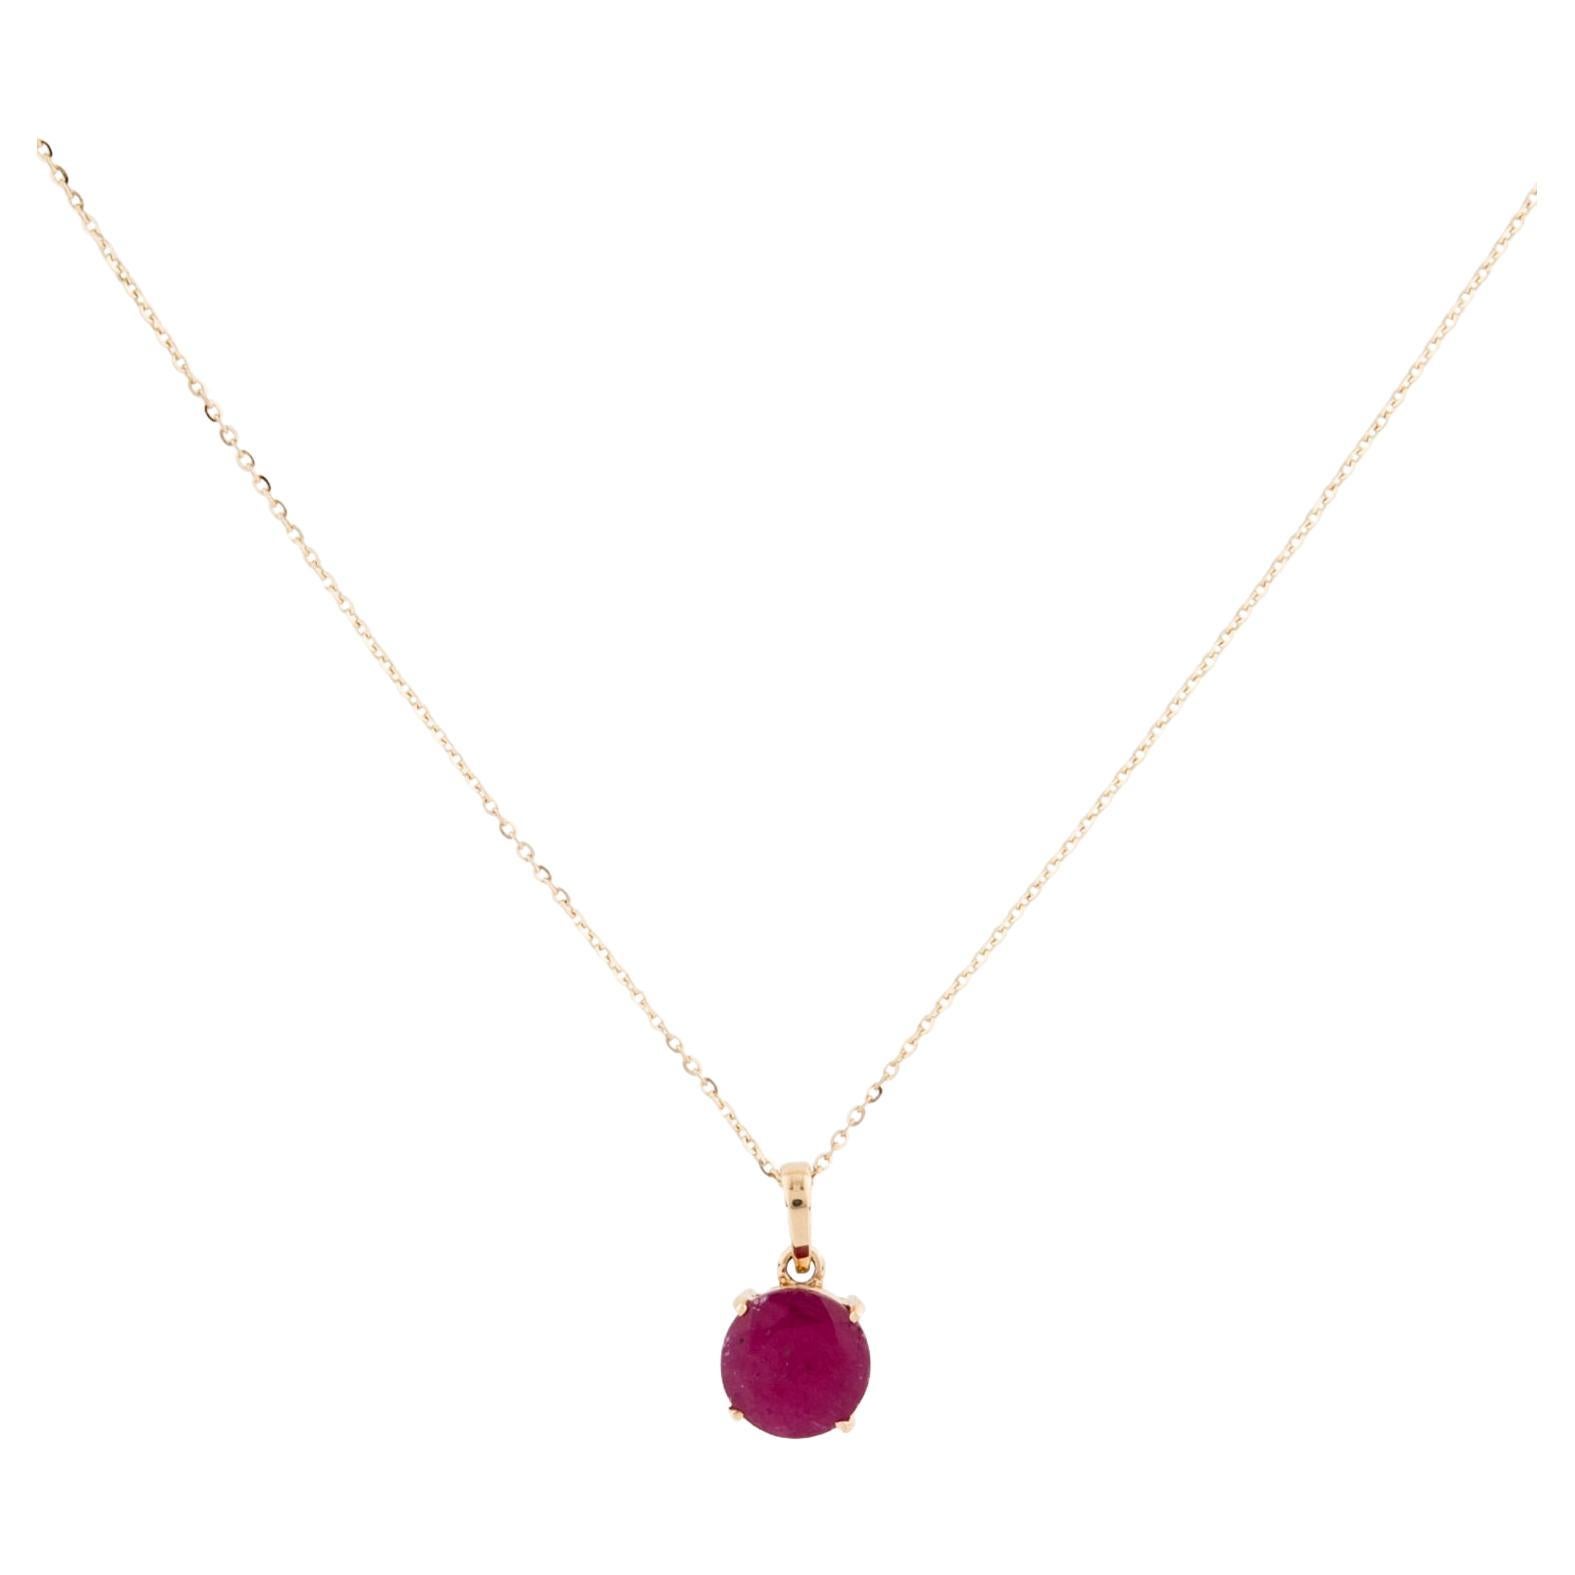 Exquisite 14K 1.21ct Ruby Pendant Necklace - Elegant Gemstone Sparkle Accent